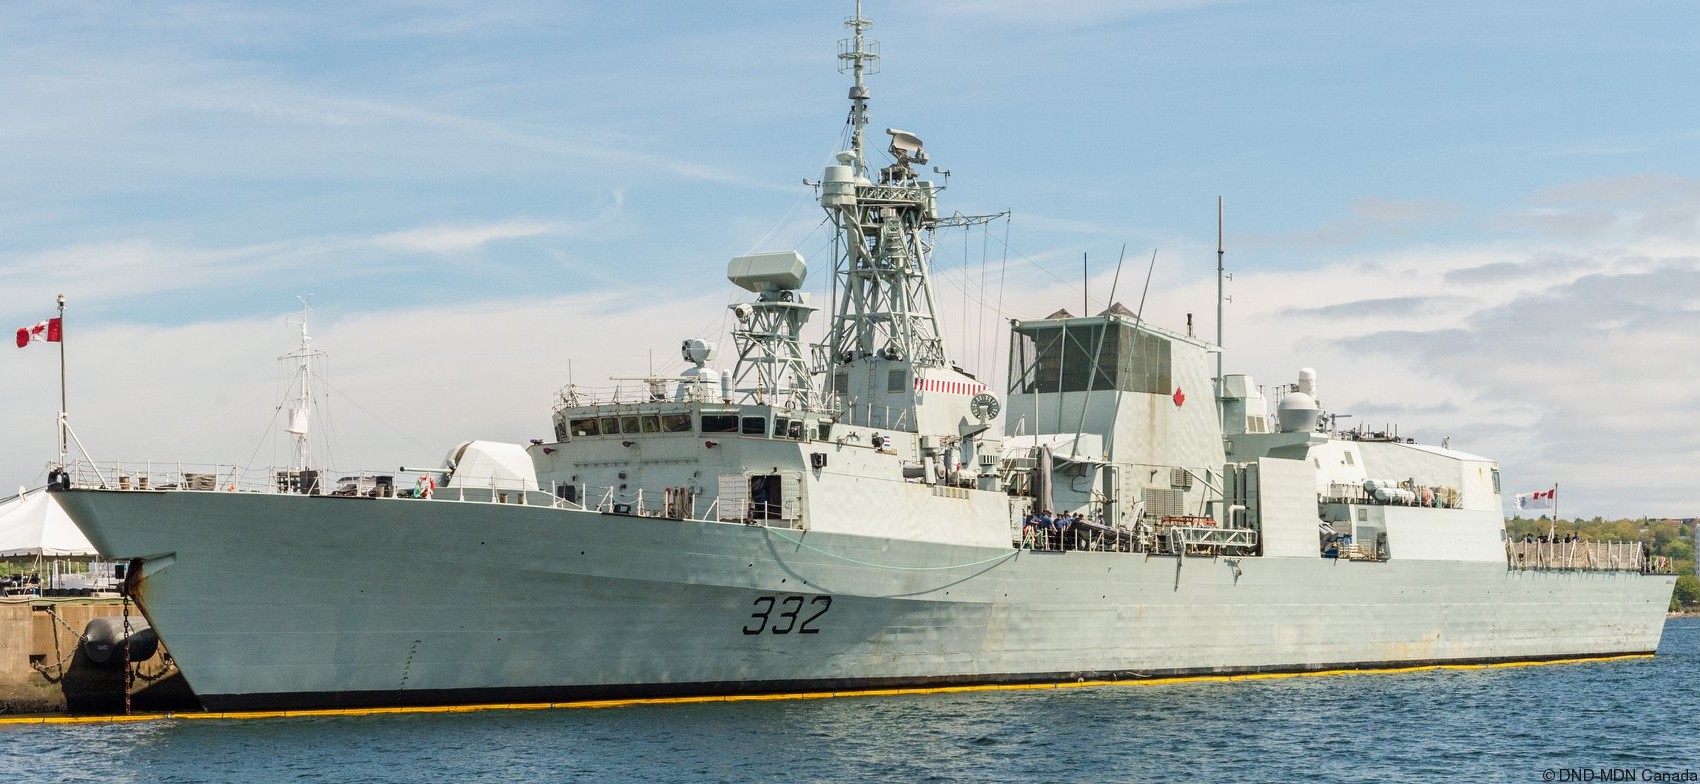 ffh-332 hmcs ville de quebec halifax class helicopter patrol frigate ncsm royal canadian navy 40